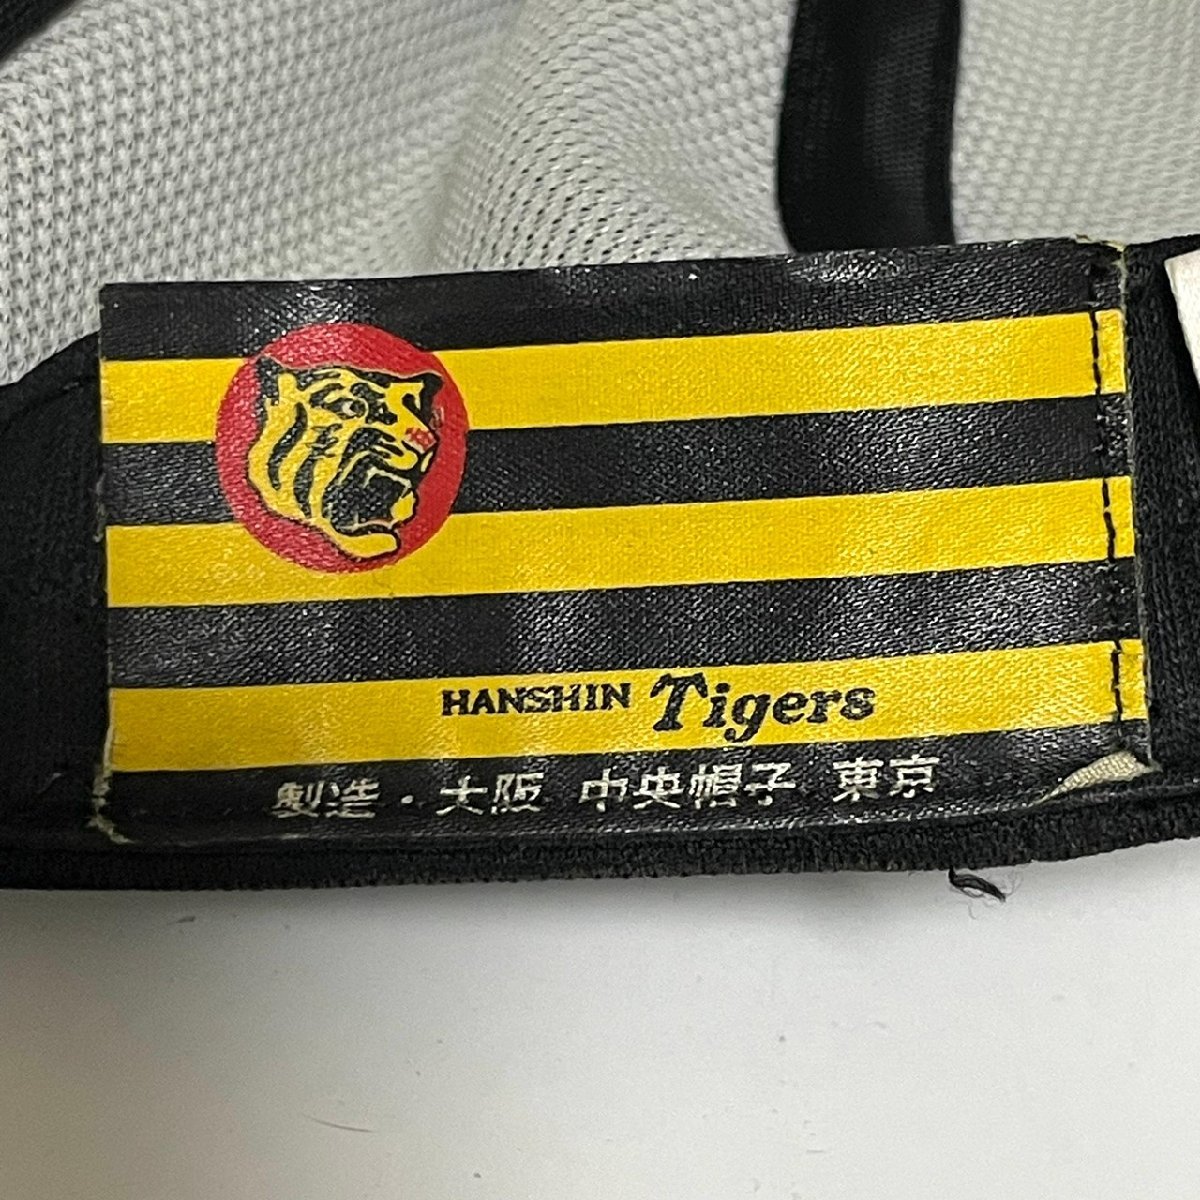 (^w^)b 阪神タイガース バタフライ 日本製 80s 90s ヴィンテージ キャップ 帽子 黒 HANSHIN Tigers Butterfly 中央帽子 58-60㎝ C0375EE_画像8